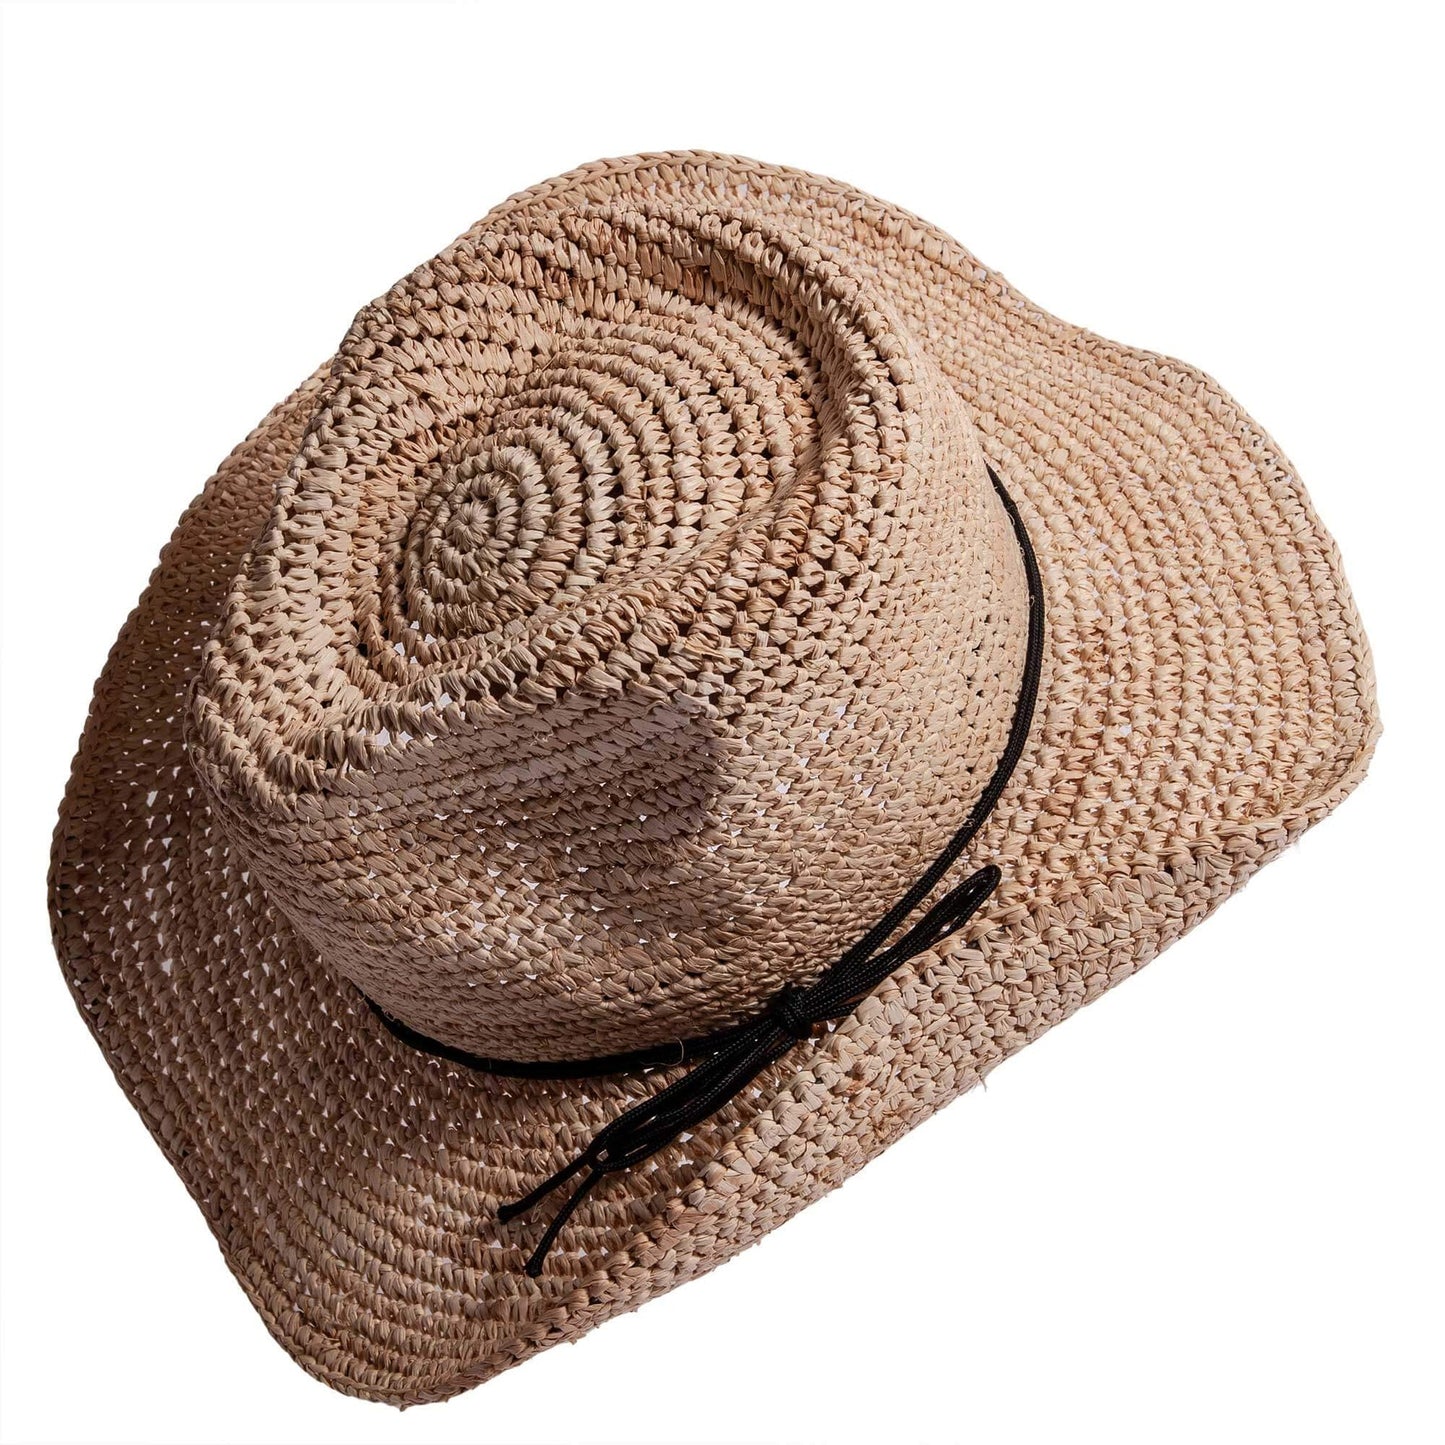 American Hat Makers Calder-Women's Straw Sun Hat